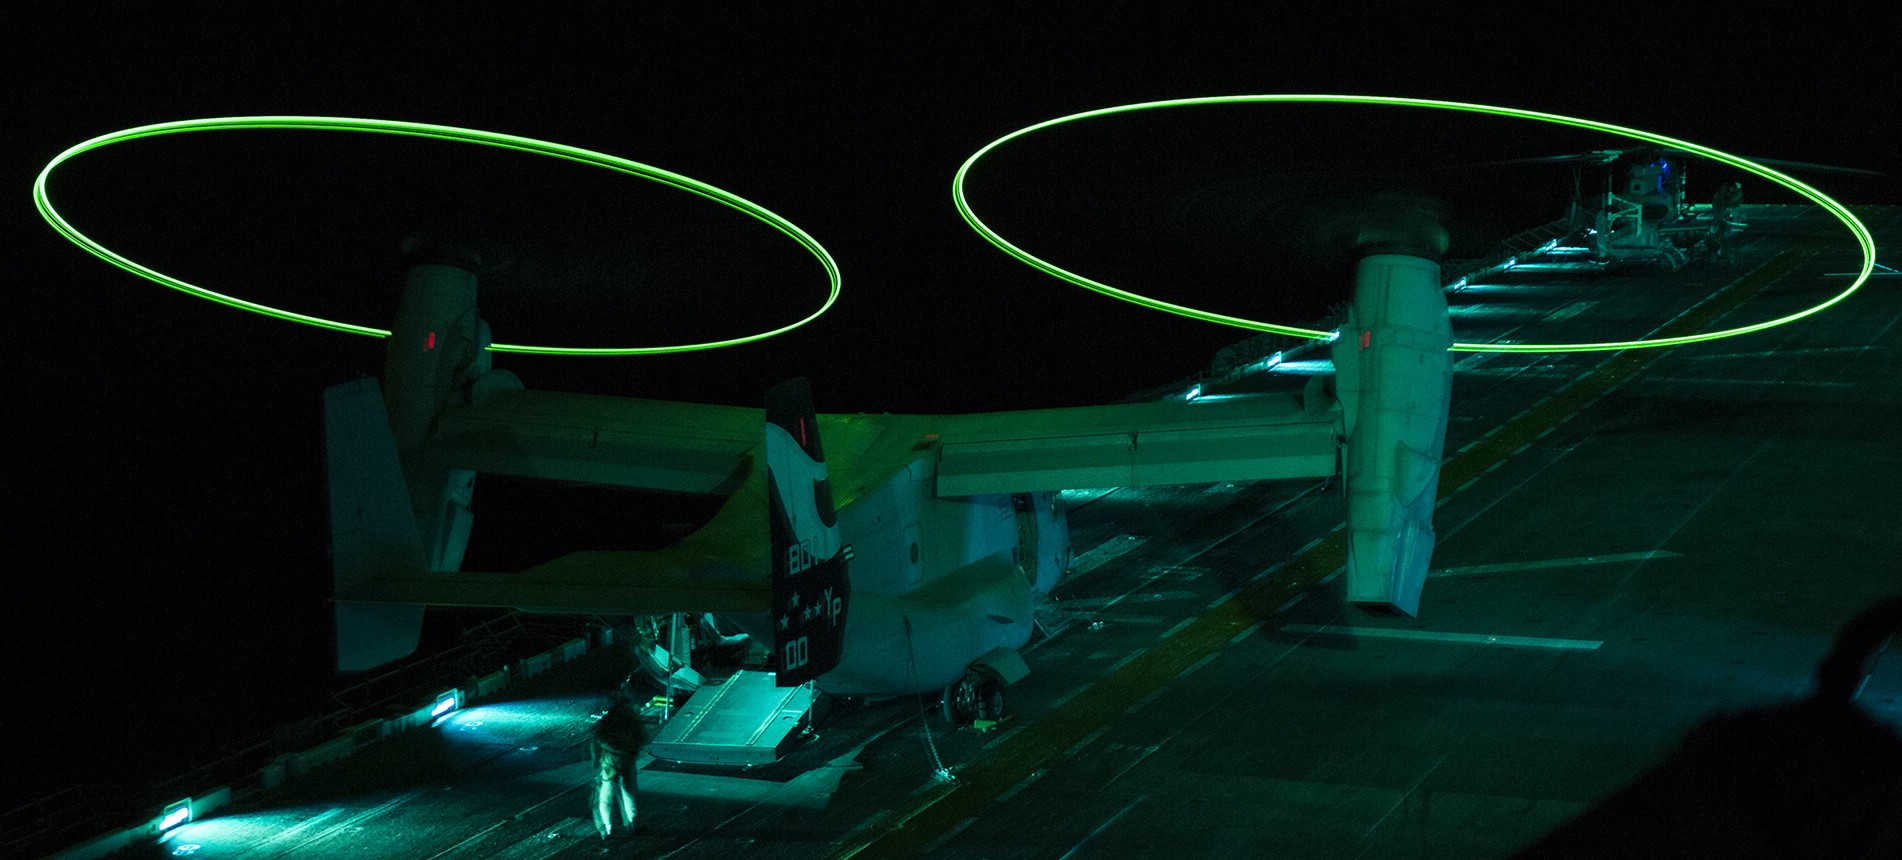 vmm-163 evil eyes mv-22b osprey uss makin island lhd-8 night operations 2014 09